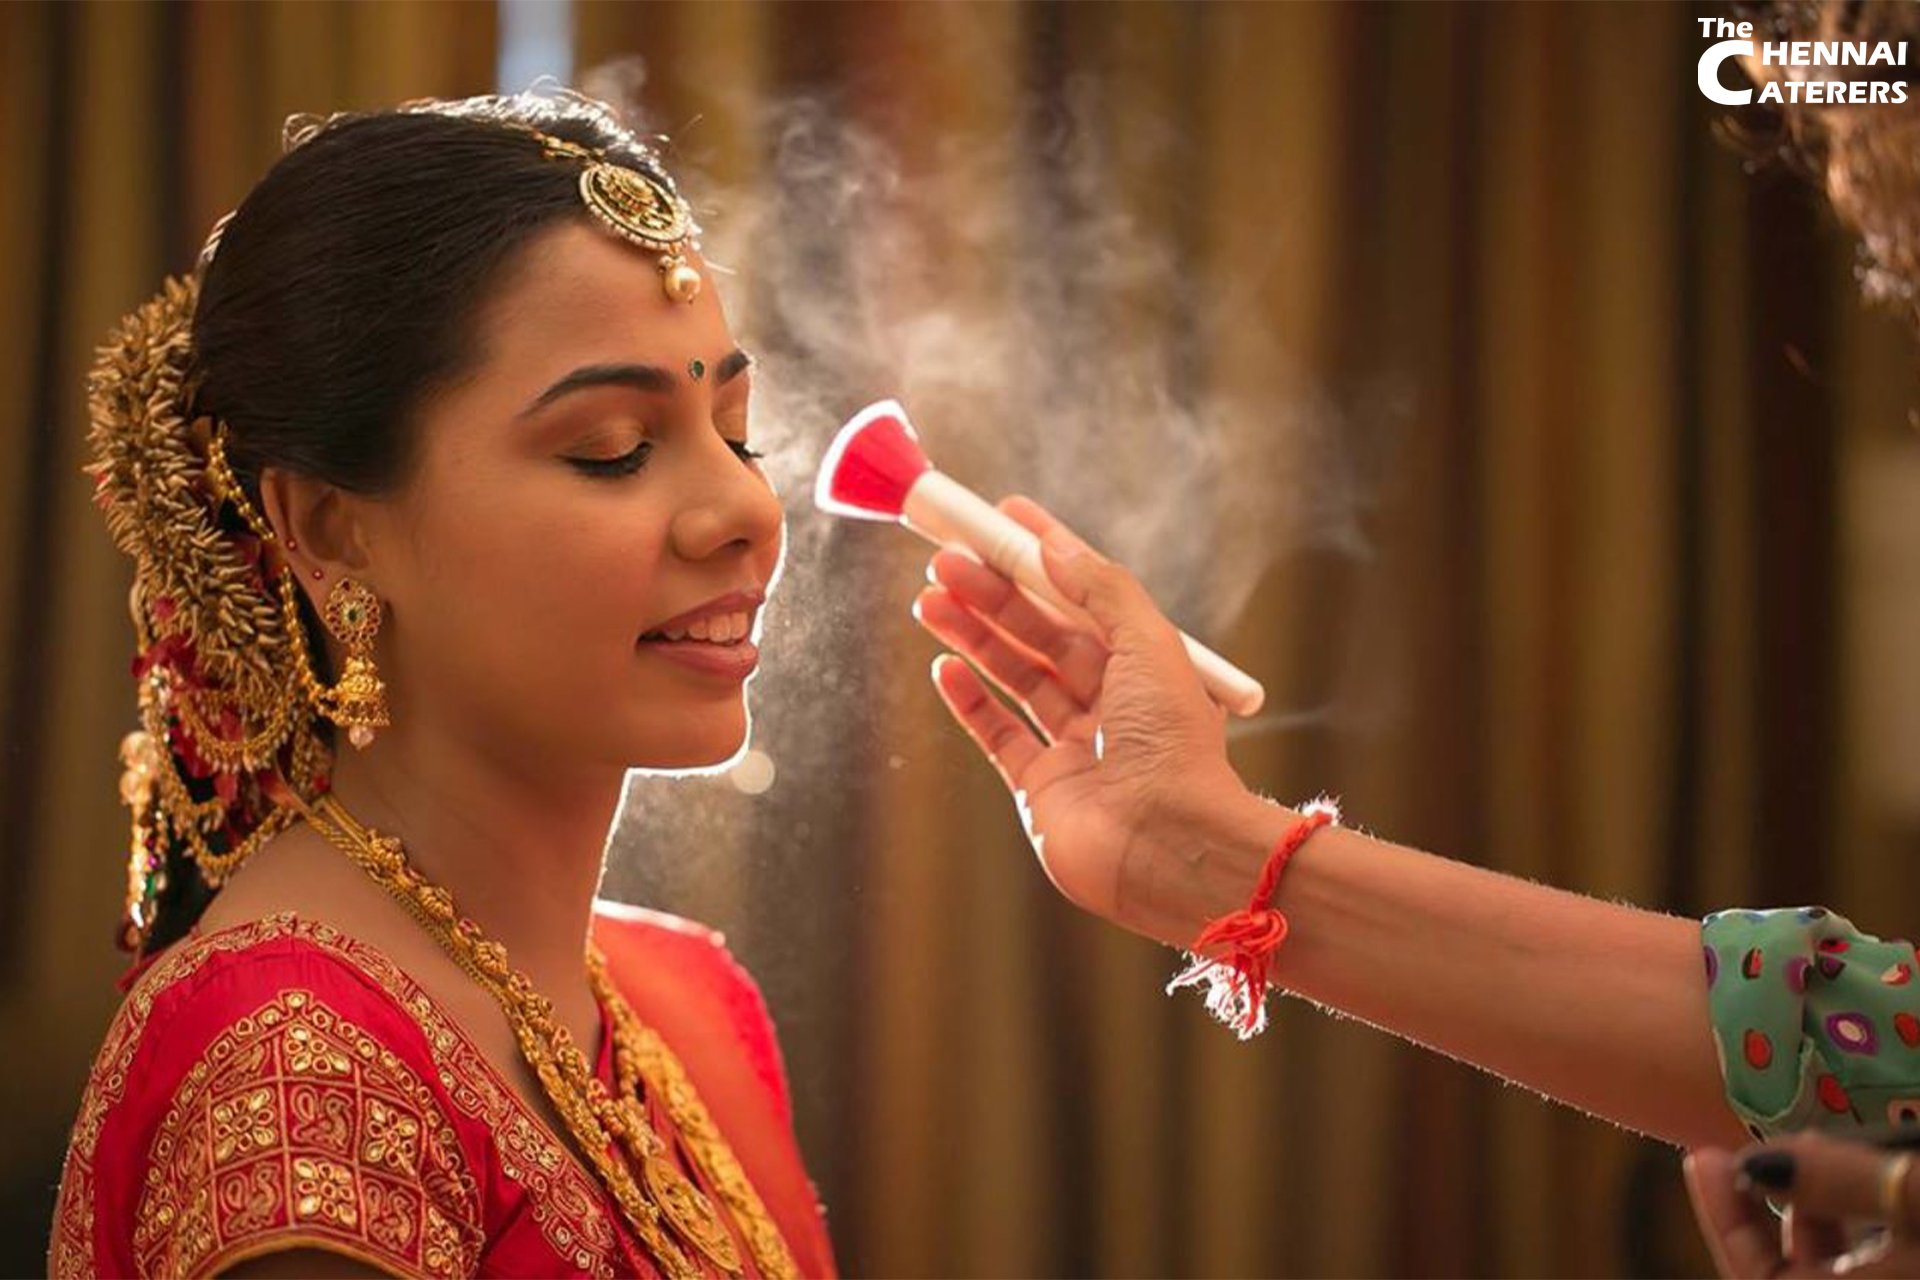 Chennai Caterers Bridal Makeup